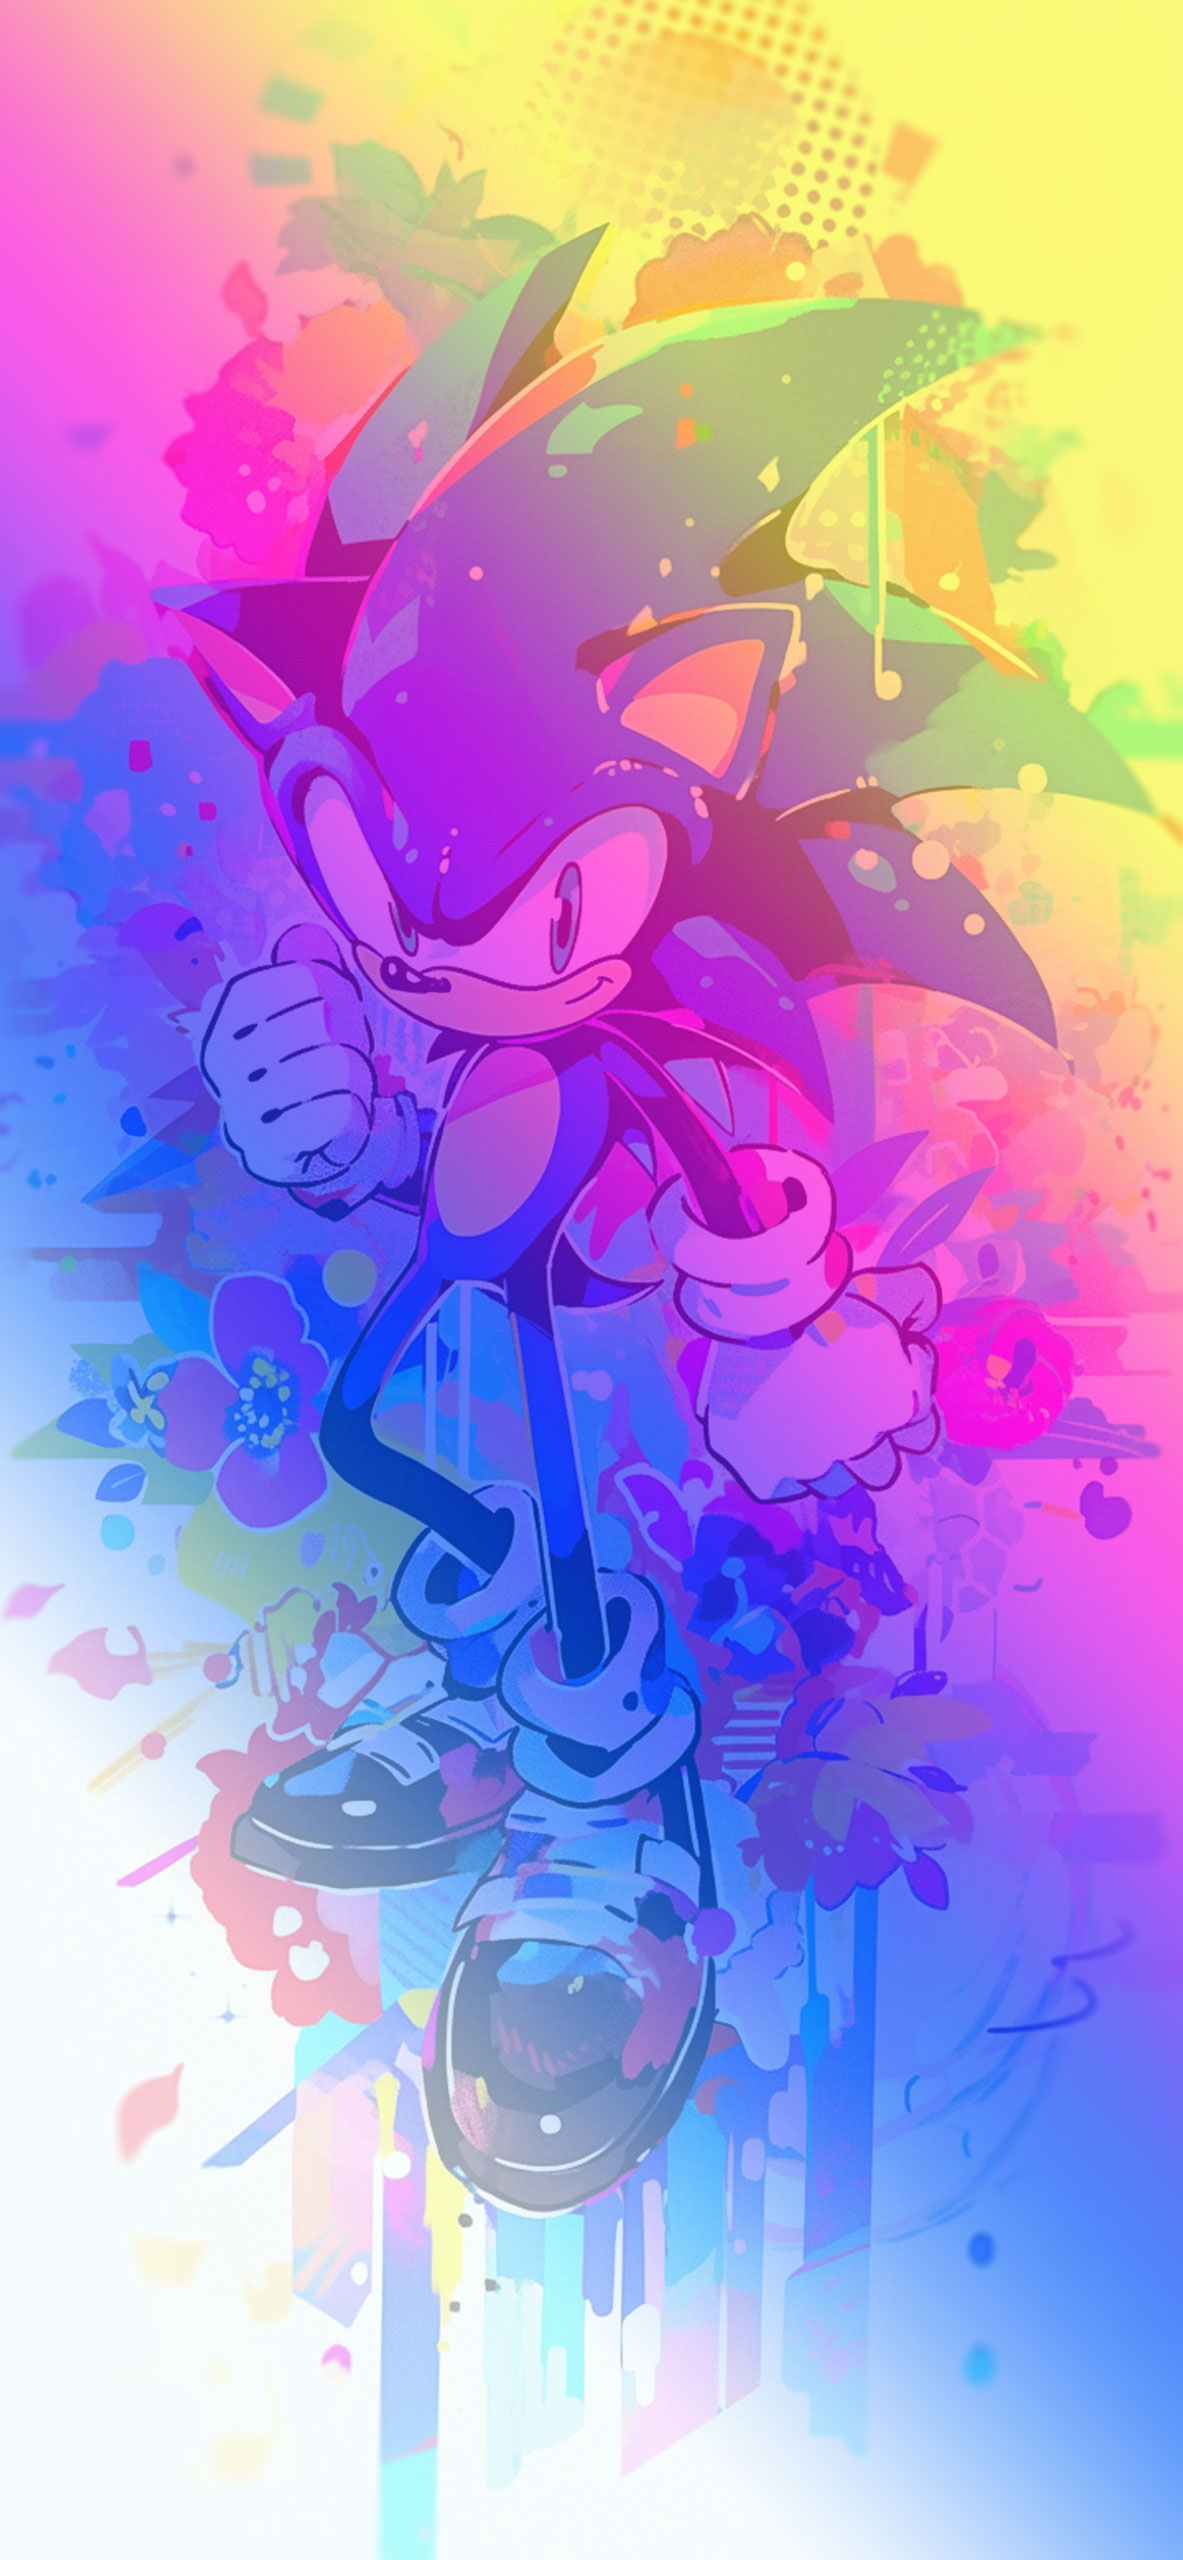 Classic sonic art wallpaper Sonic the Hedgehog cool wallpaper